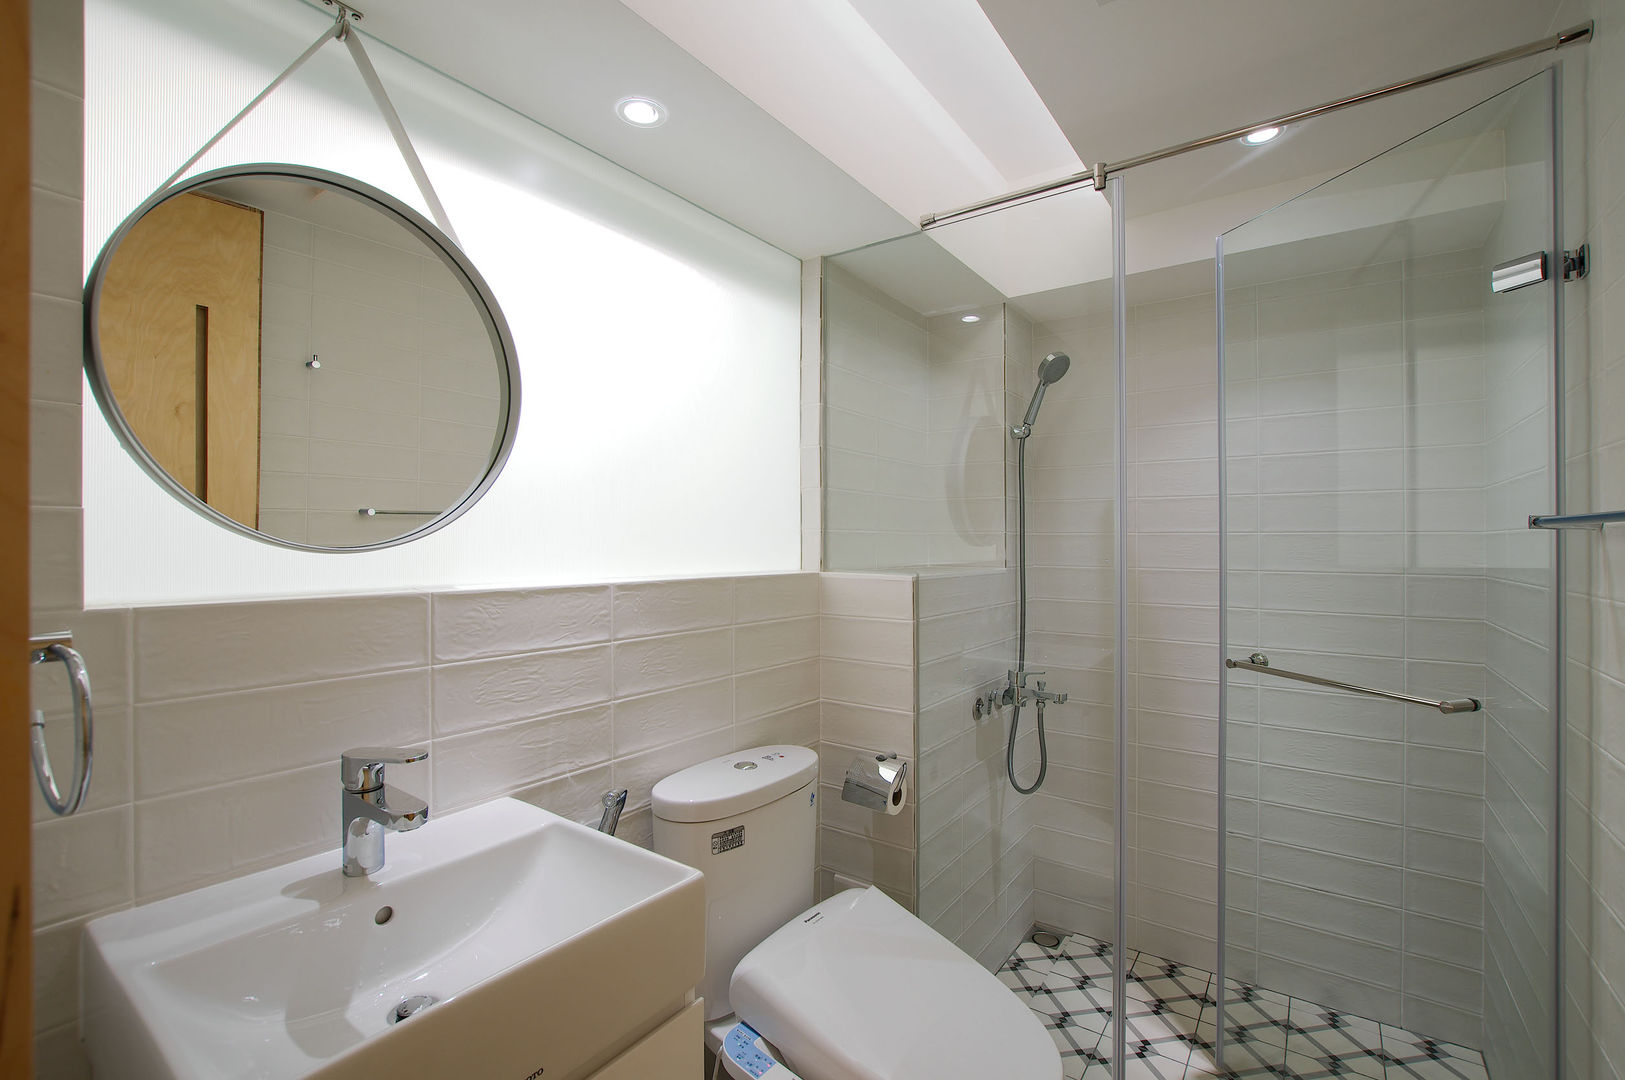 Apartment L, 六相設計 Phase6 六相設計 Phase6 浴室 採光通風,玻璃隔間,玻璃貼膜,地鐵磚,花磚,乾濕分離,掛鏡,圓鏡